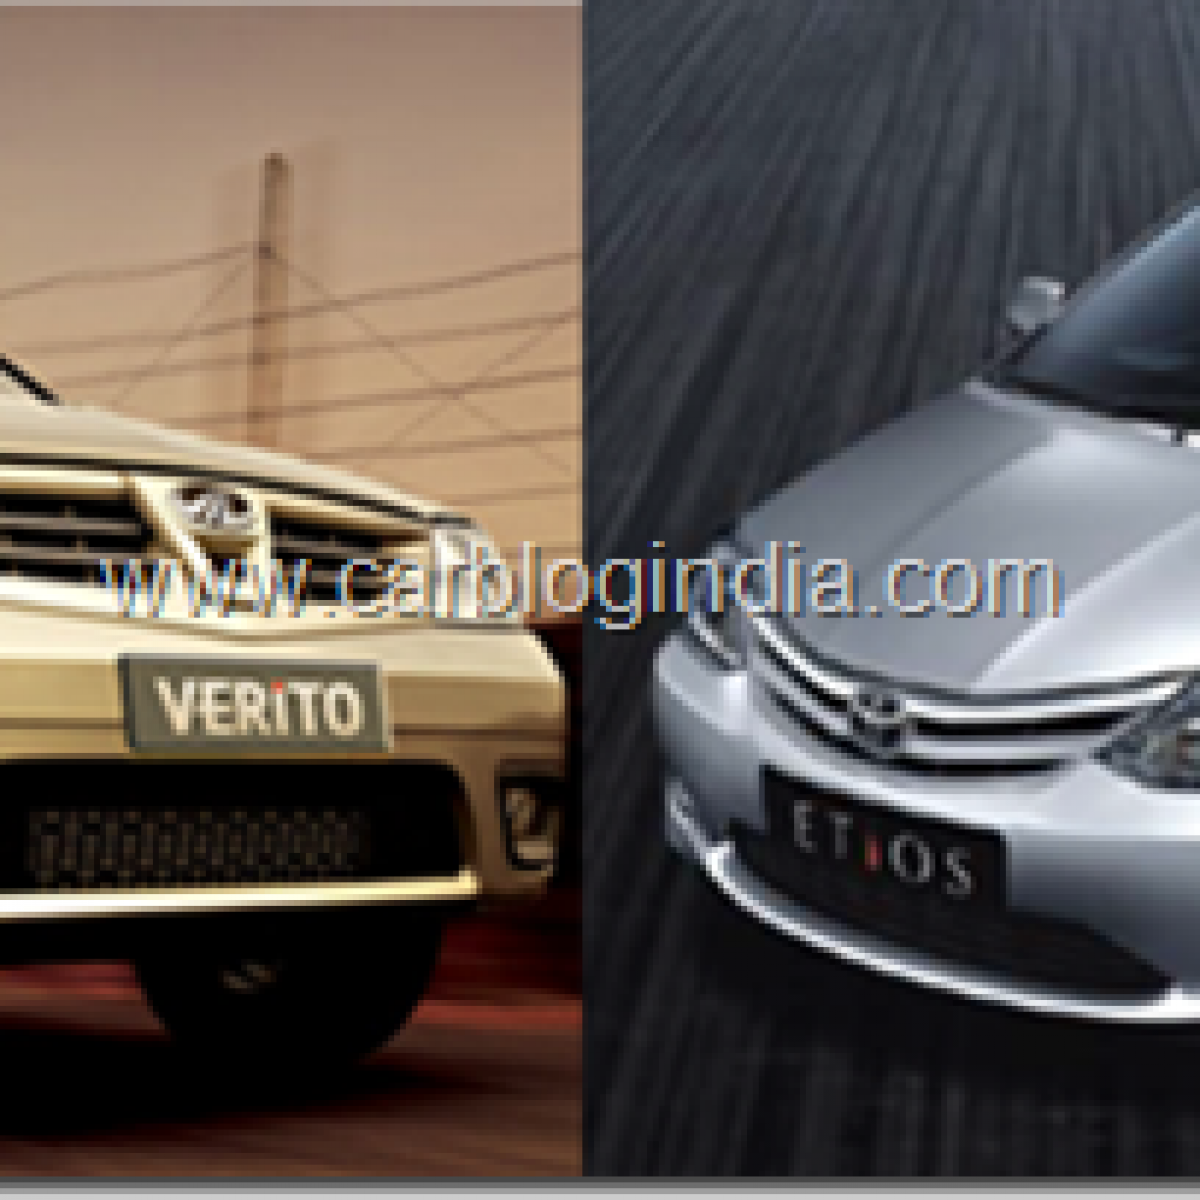 Confused Between Toyota Etios Diesel And Mahindra Verito